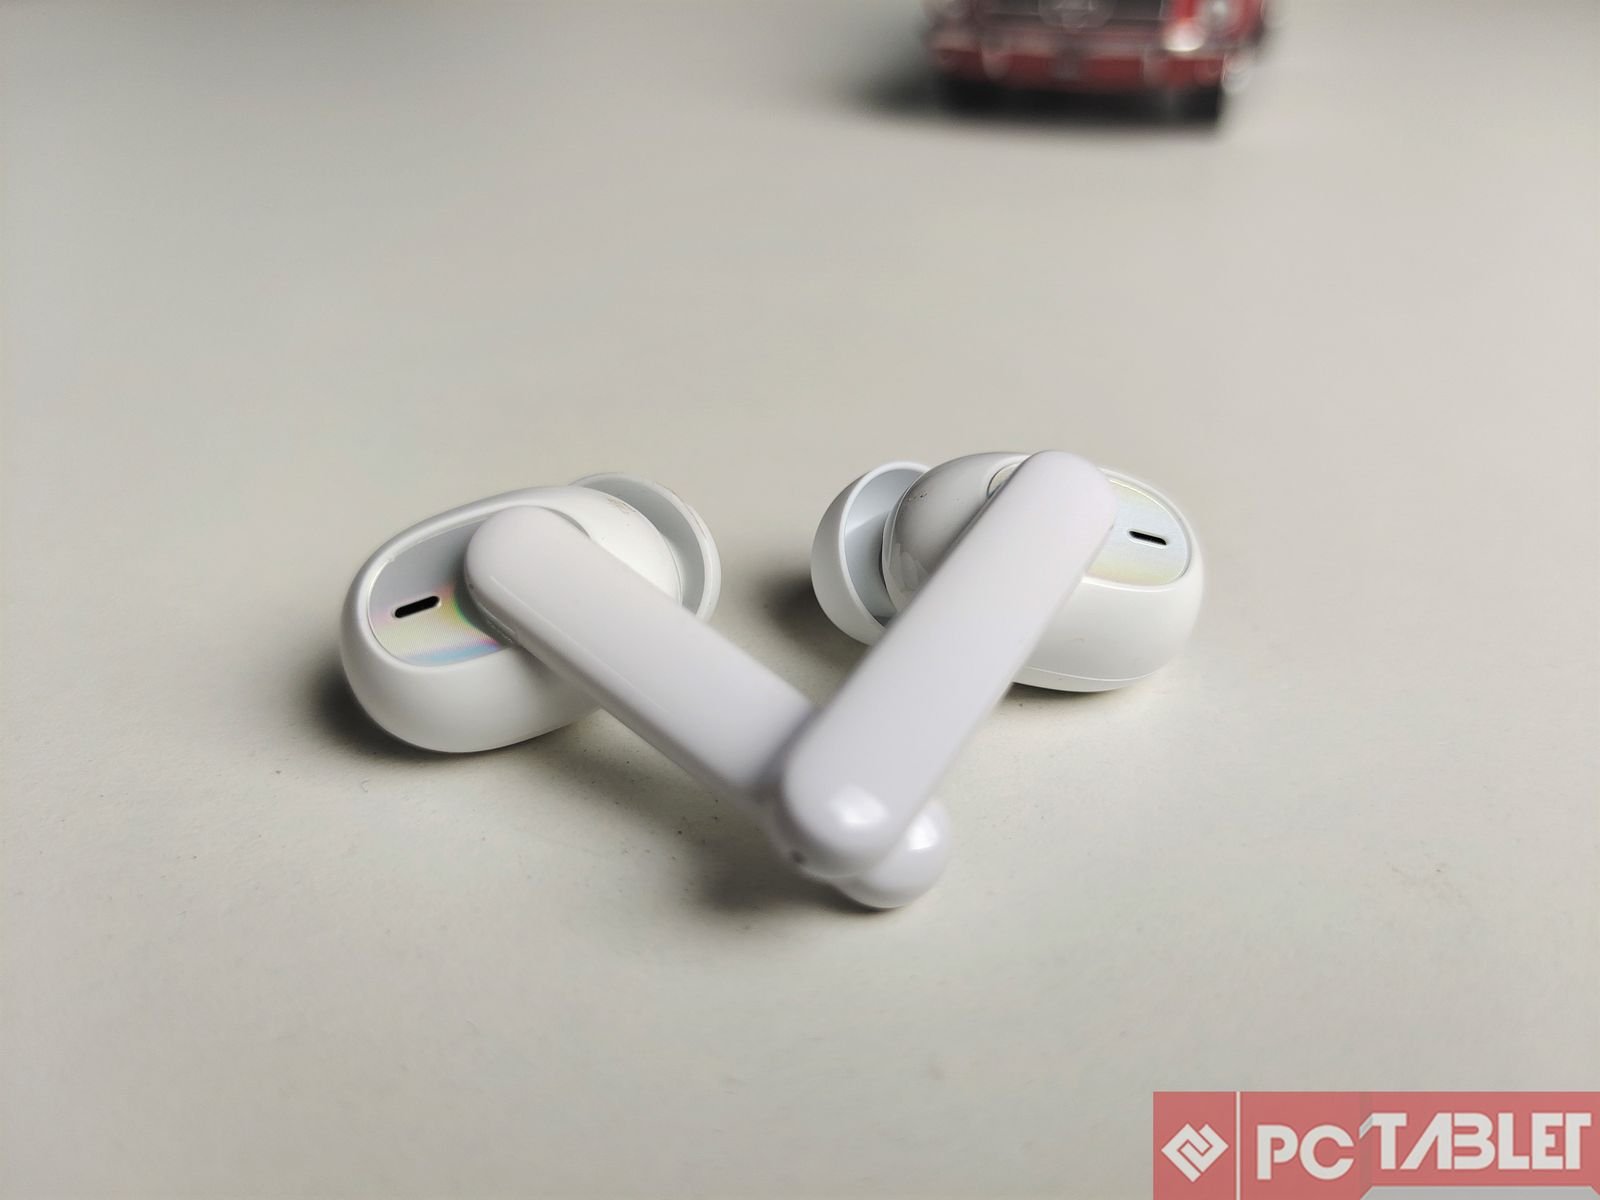 Oppo Enco W51 Truly Wireless Earbuds Review 7